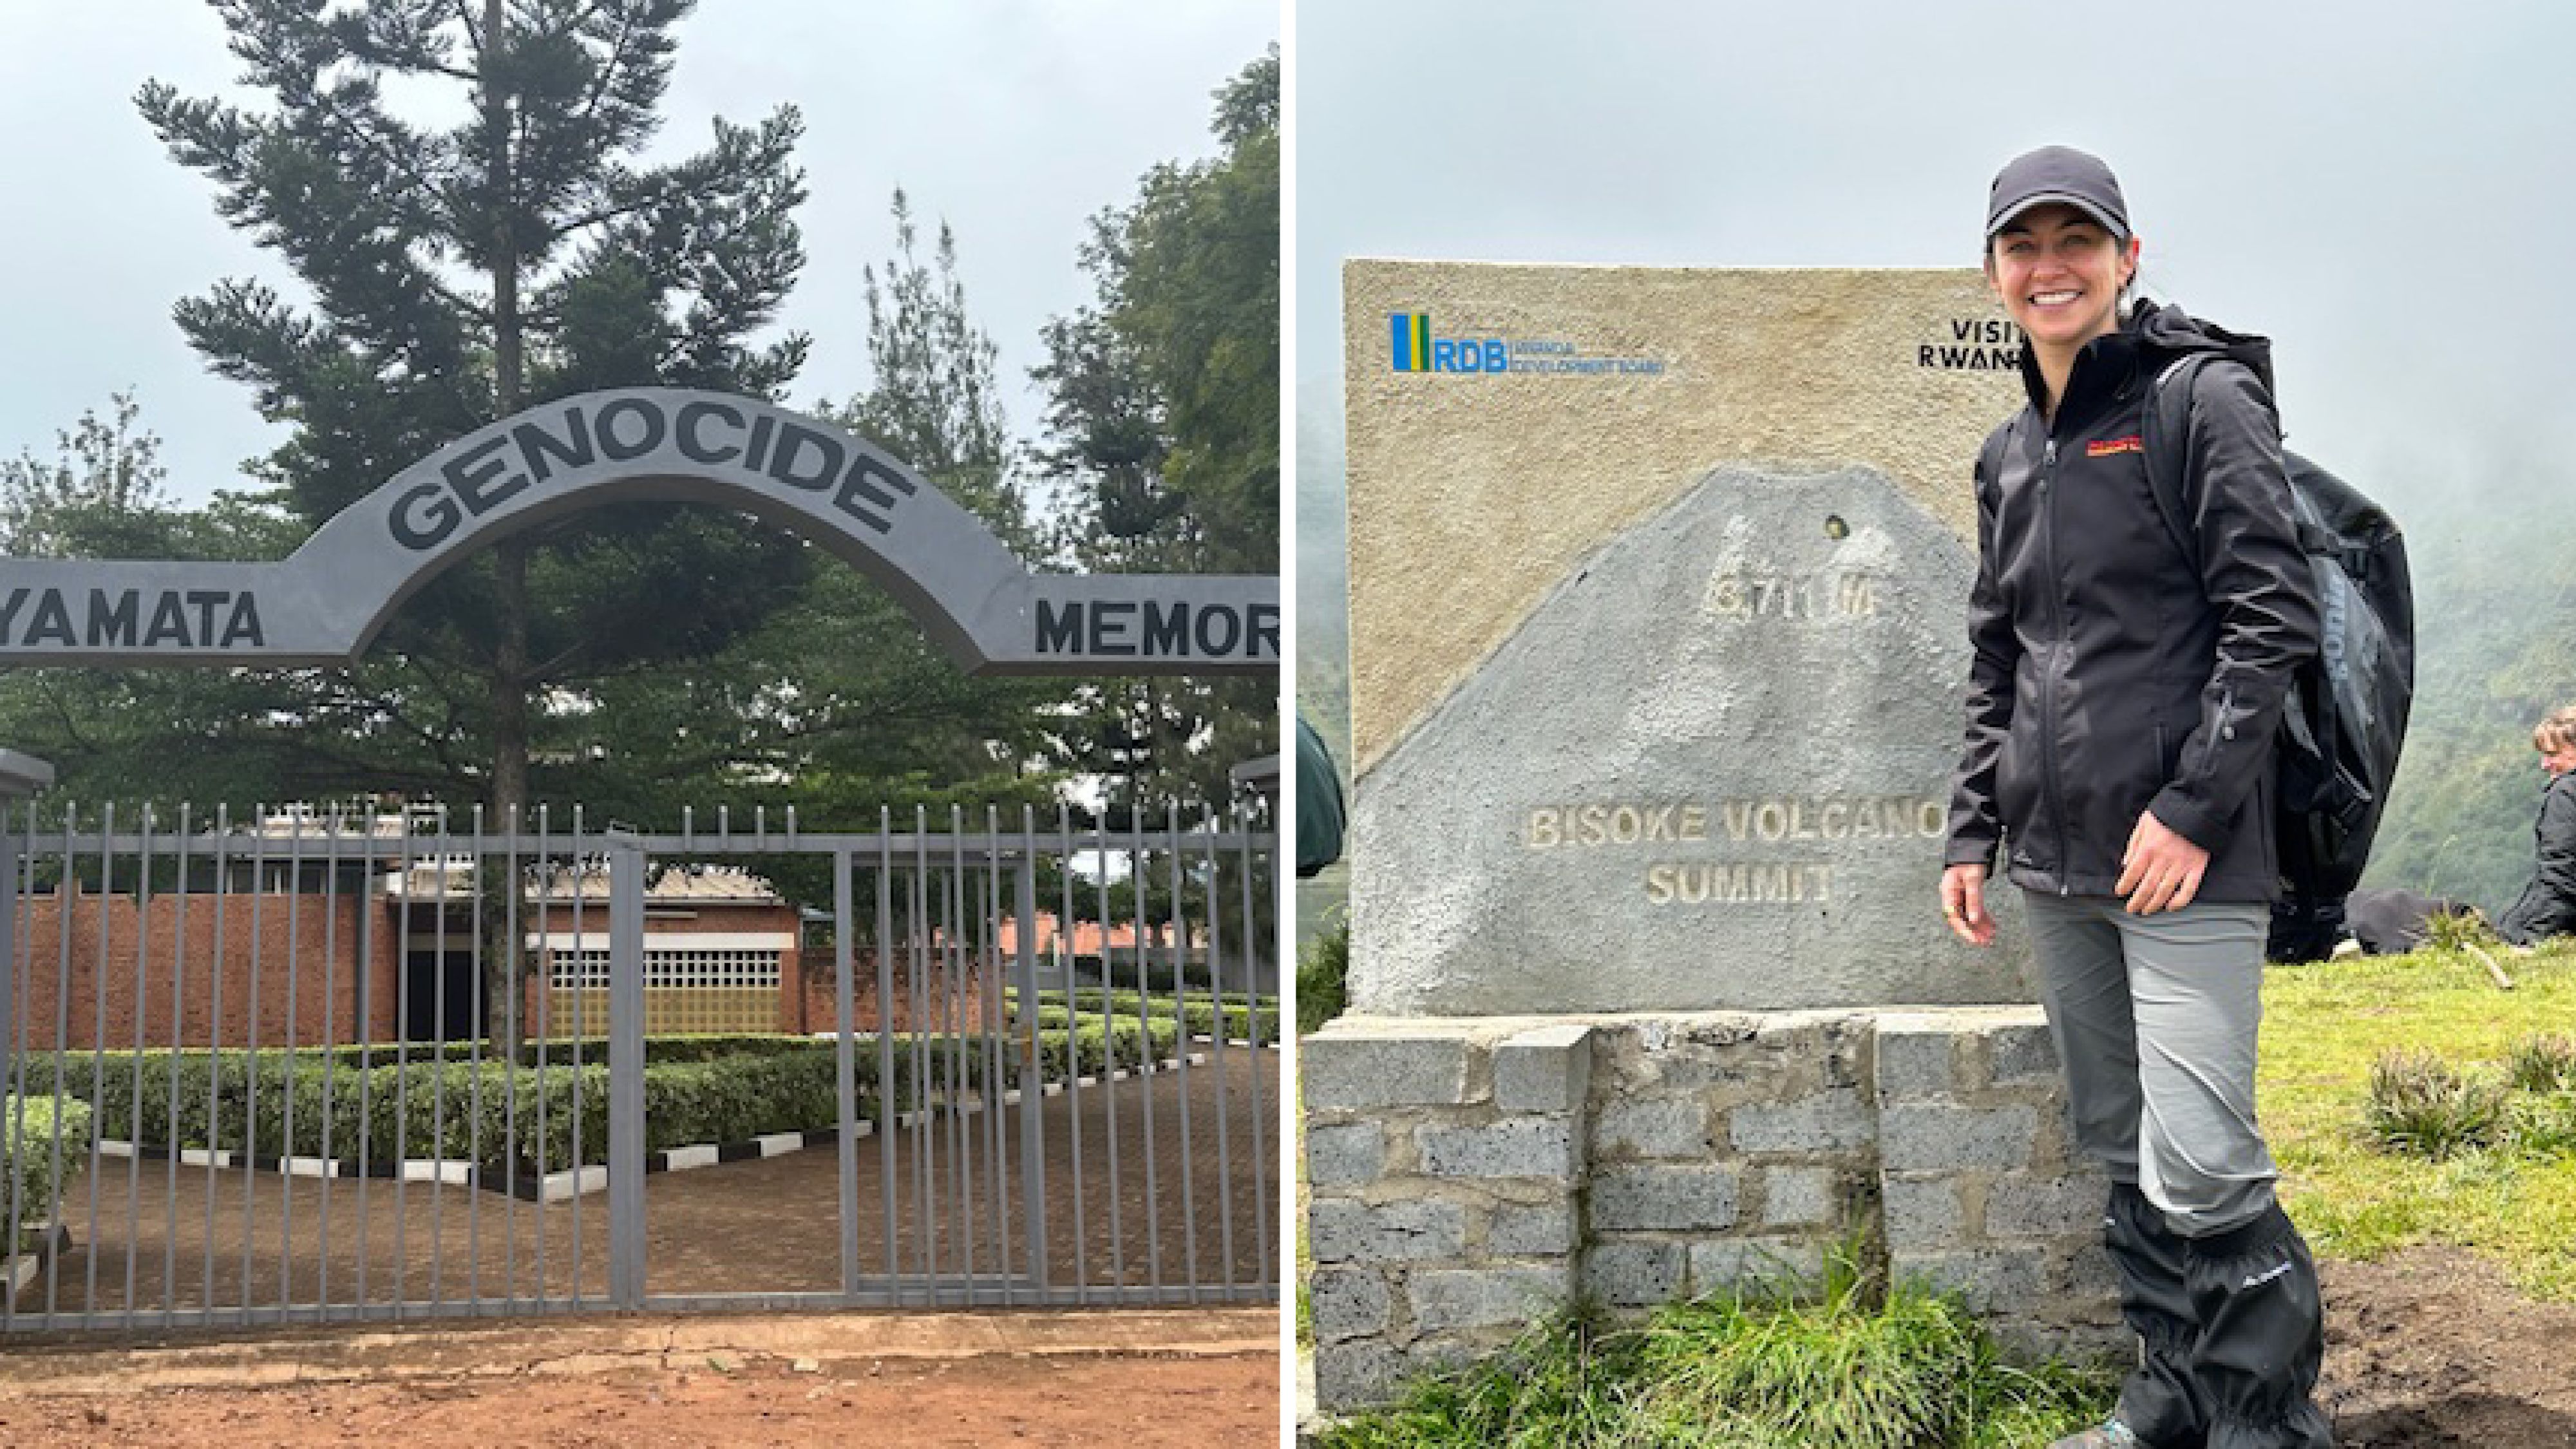 Global health visit to Rwanda